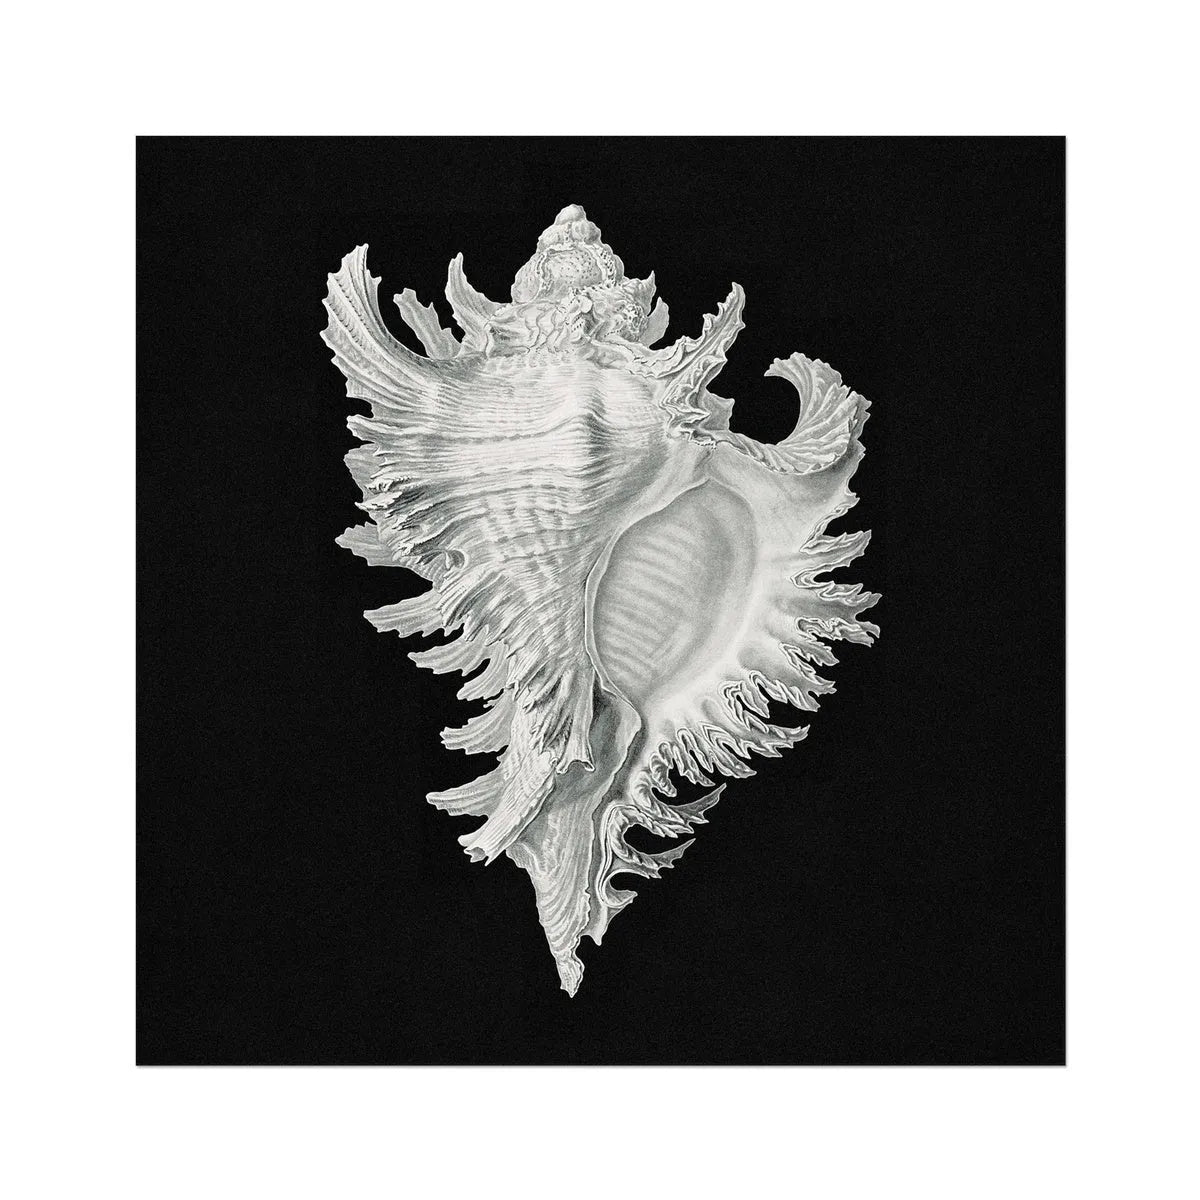 Vintage Shell Marine Life Illustration Too Fine Art Print - 30’x30’ - Posters Prints & Visual Artwork - Aesthetic Art